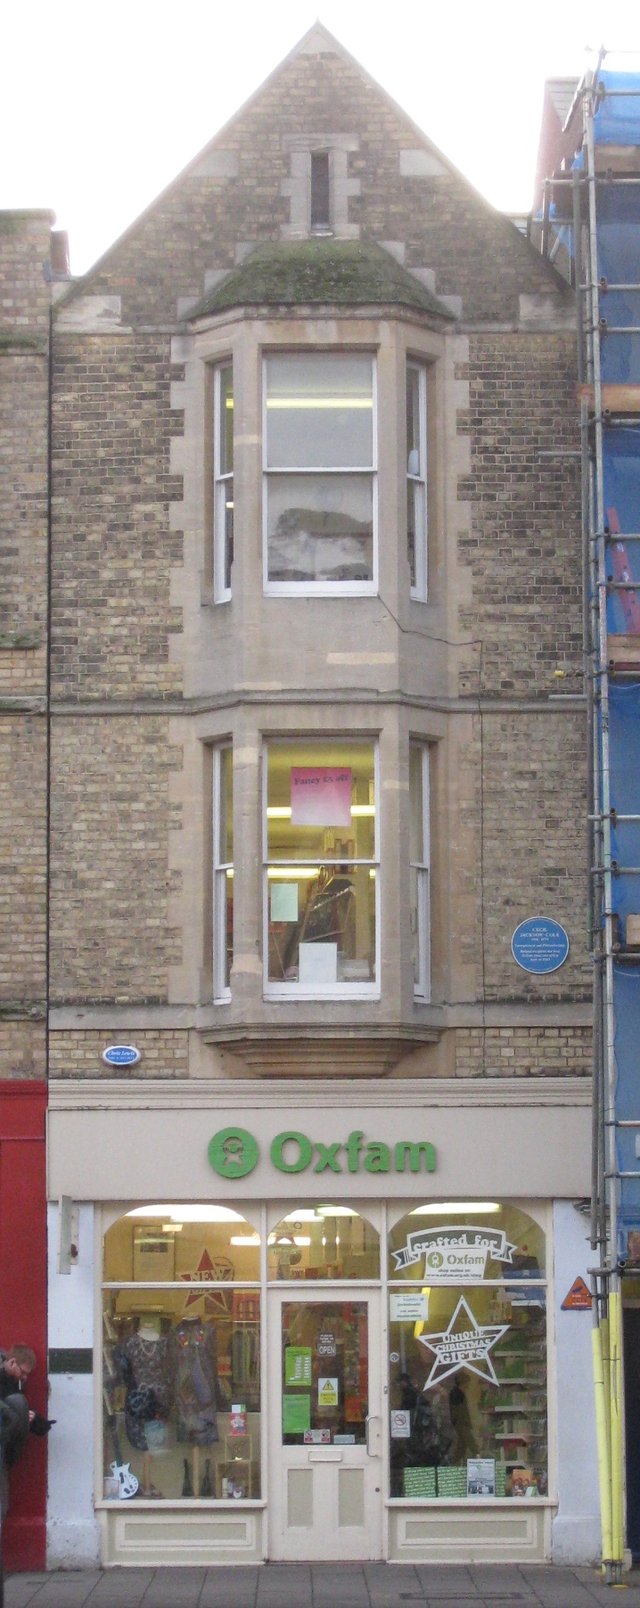 Original Oxfam shop at 17 Broad Street, Oxford